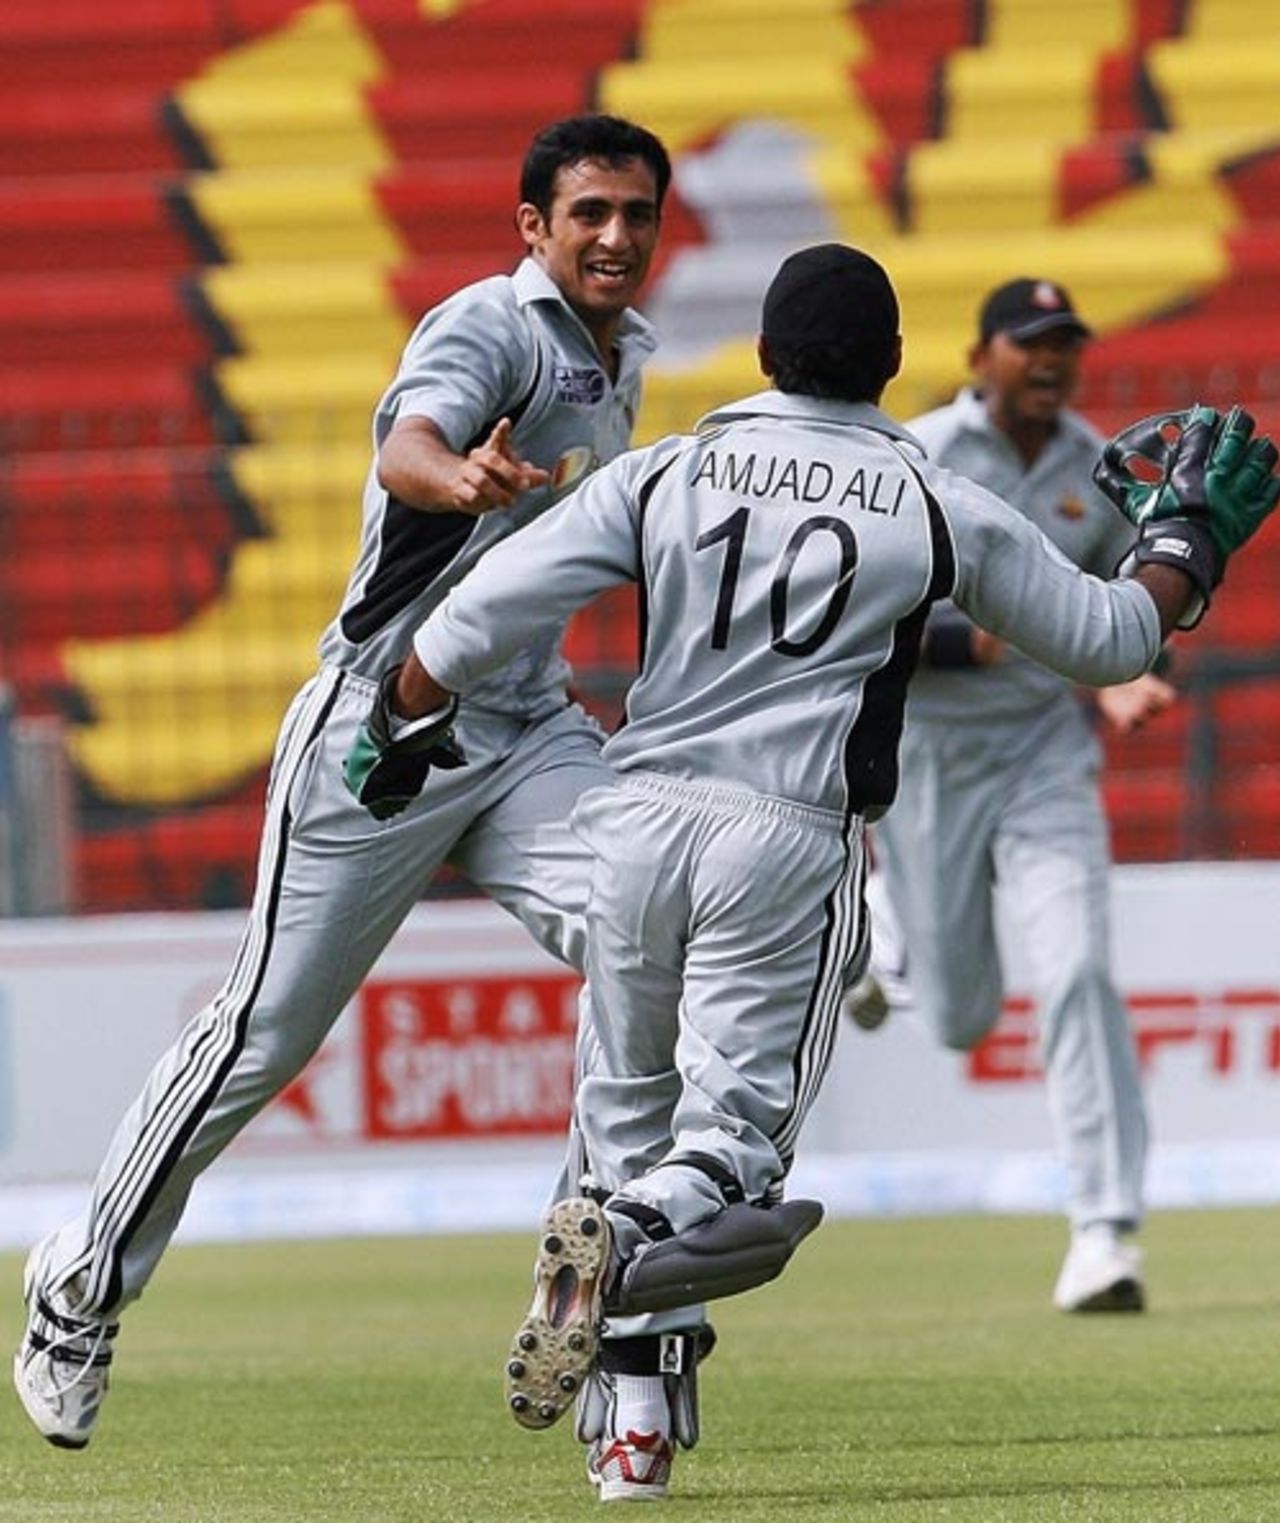 Zahid Shah dismissed Nazimuddin for 2, Bangladesh v UAE, Group A, Lahore, June 24, 2008